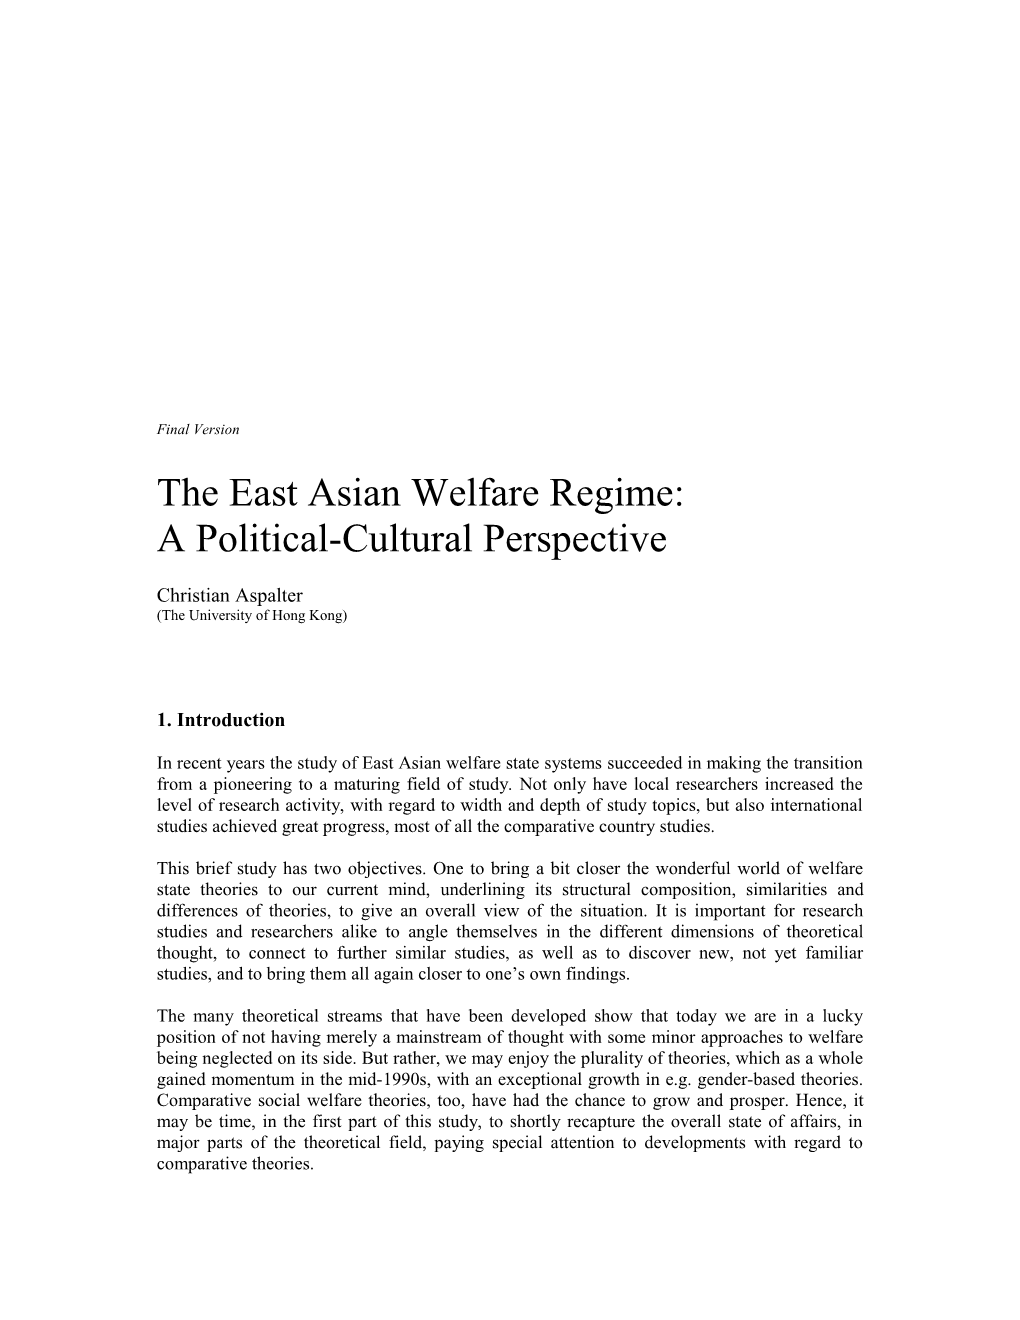 The East Asian Welfare Regime